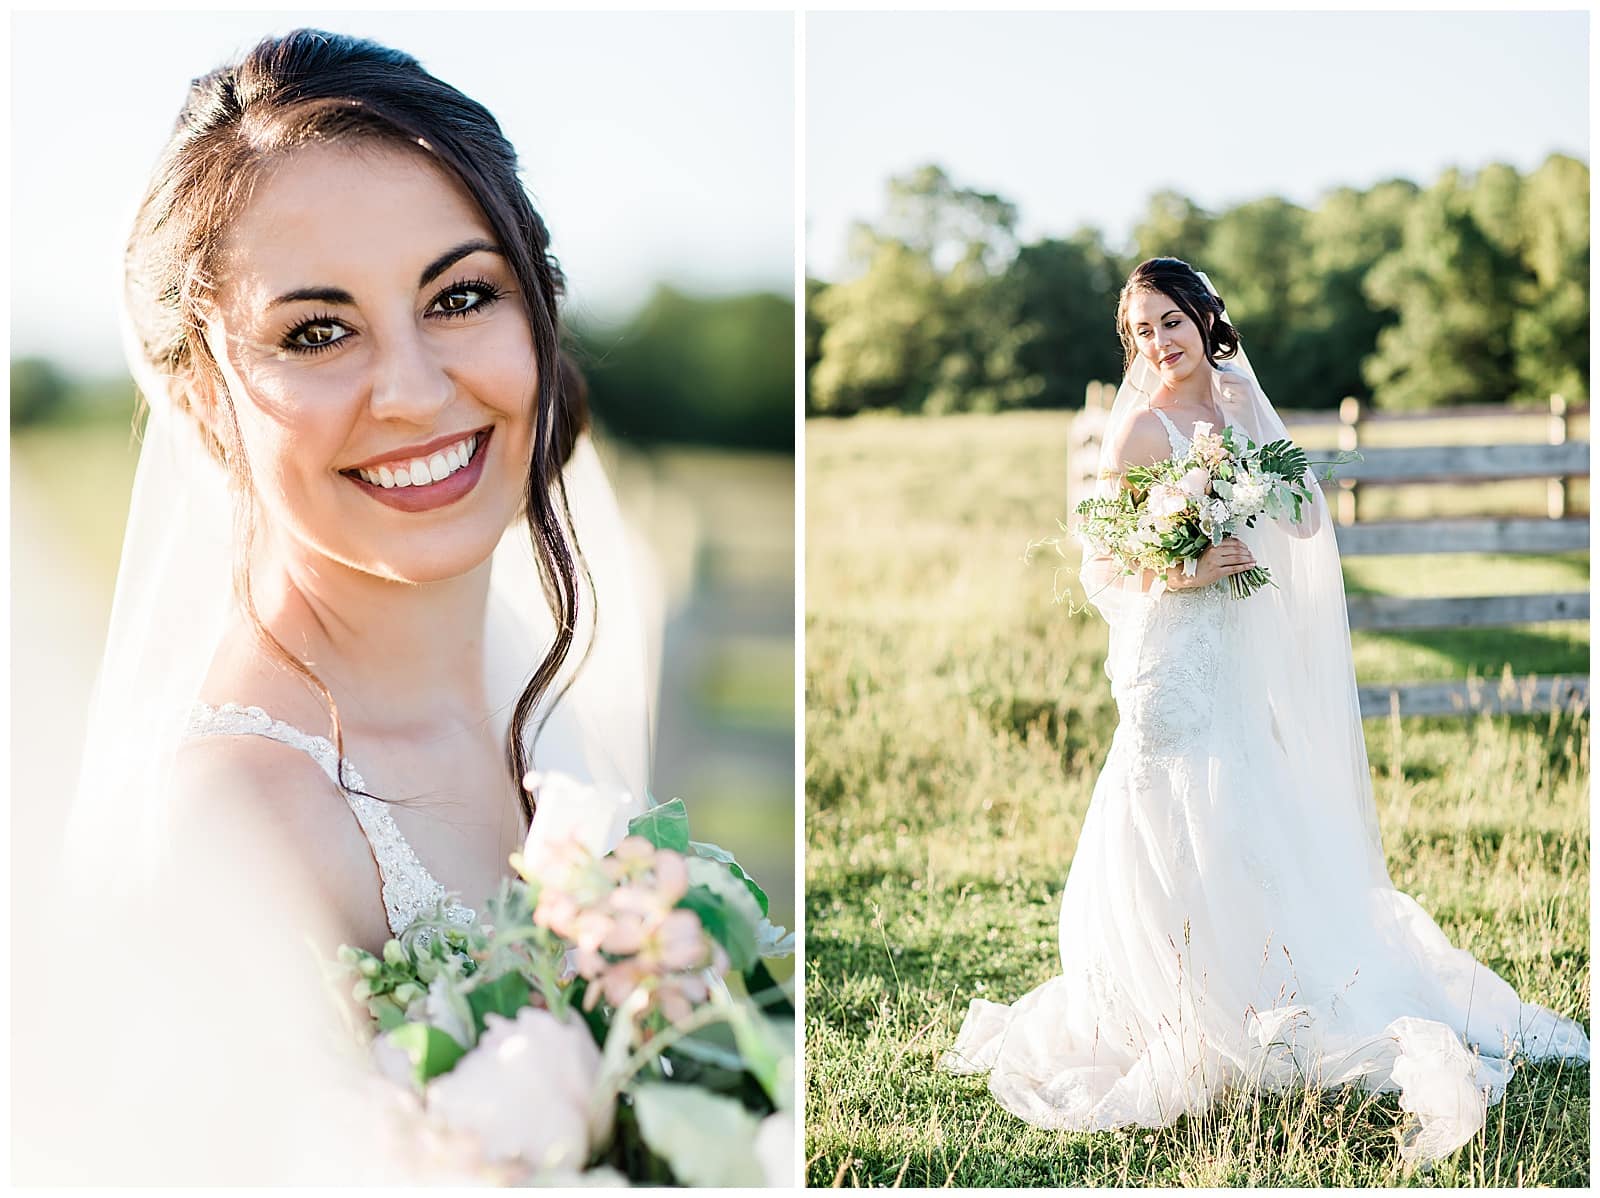 Danielle-Defayette-Photography-Middle-Fork-Barn-Abingdon-Wedding-2020_0008.jpg